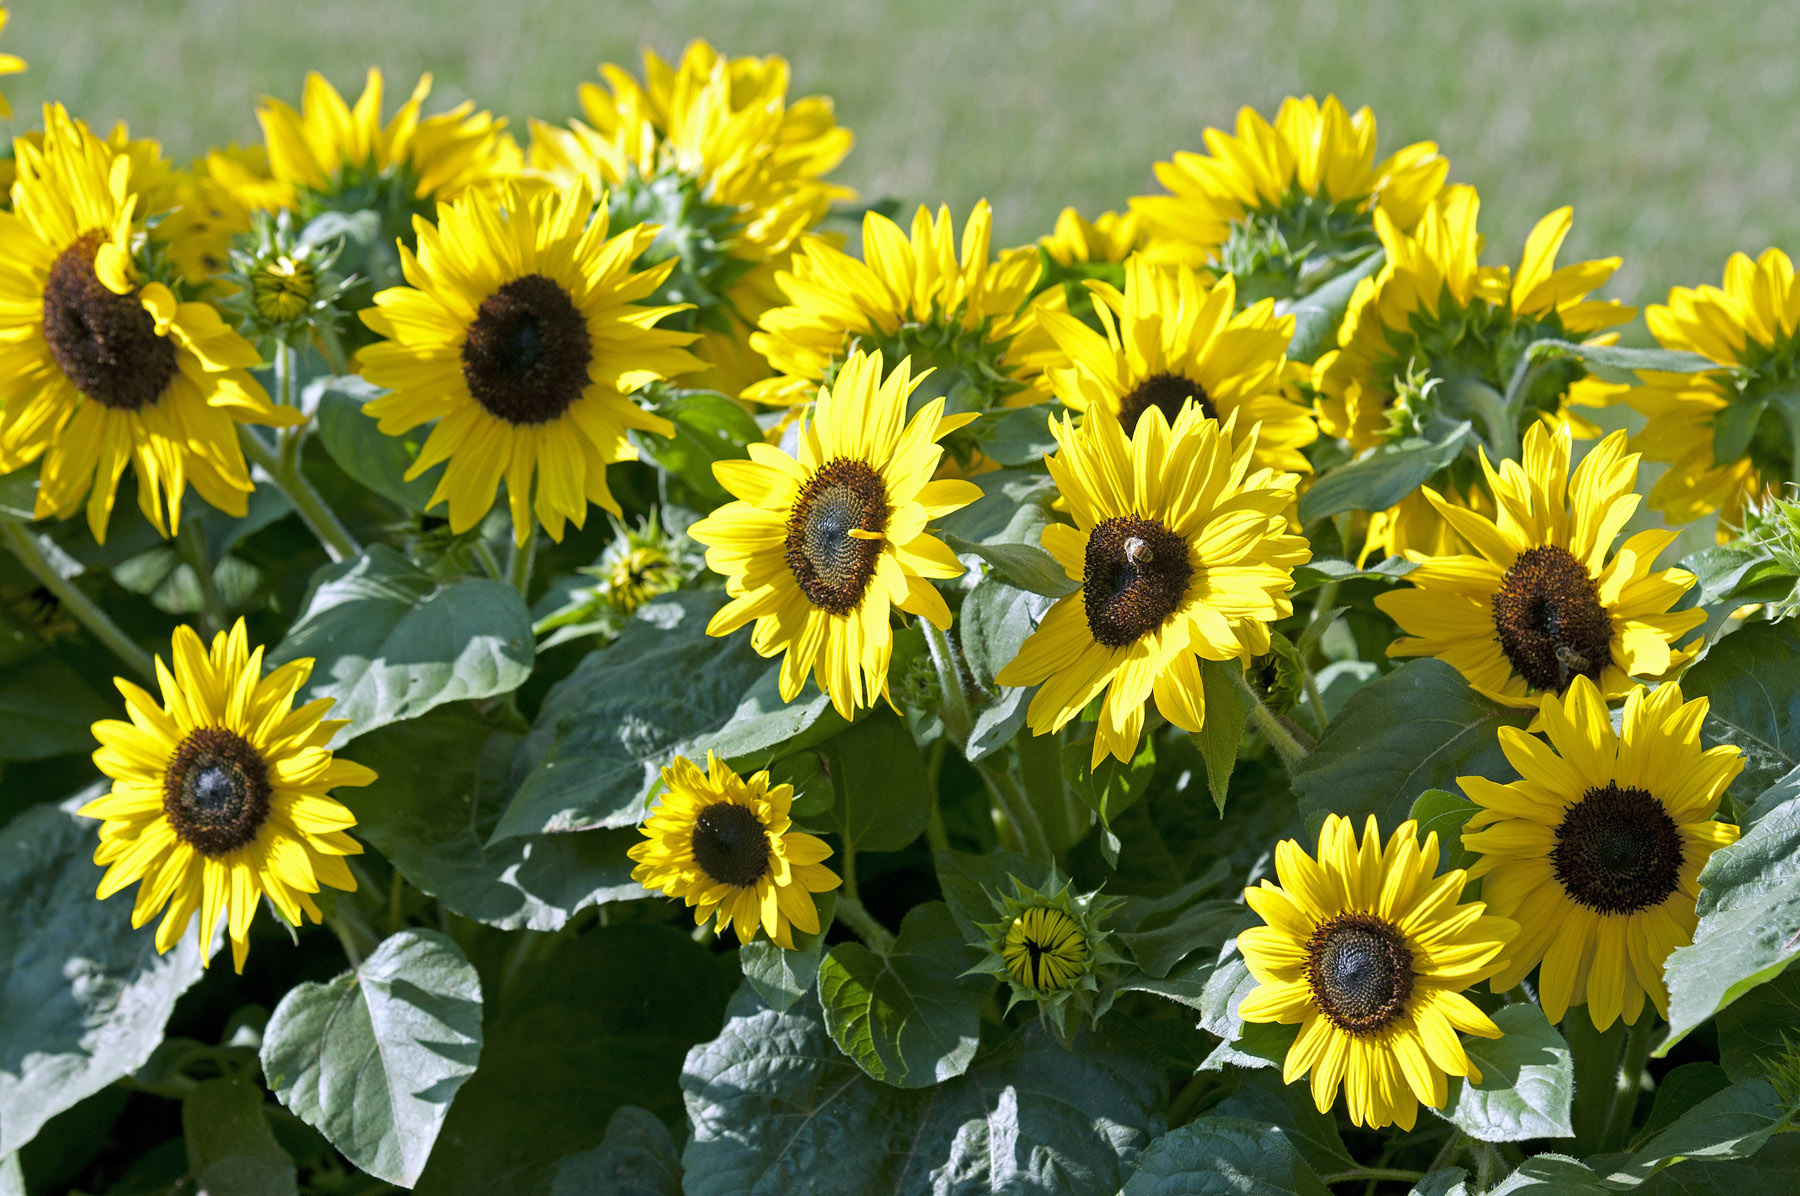 Suntastic sunflowers